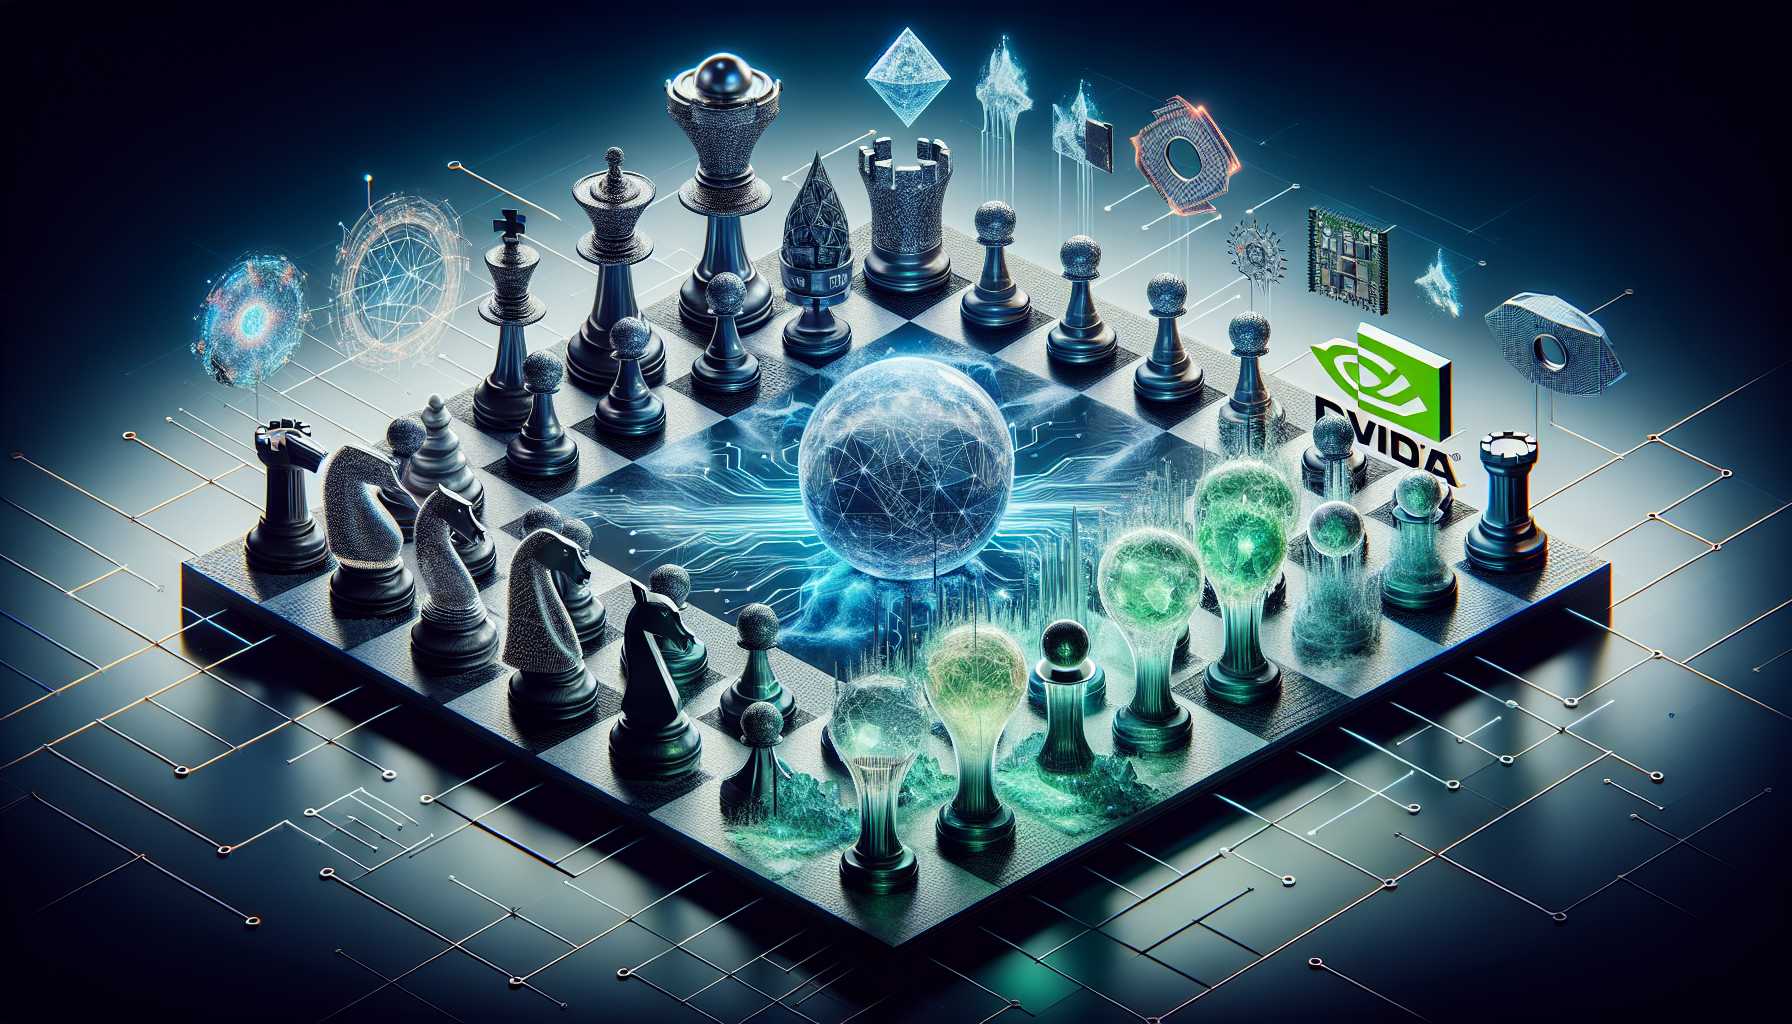 representative pieces of Palantir and Nvidia on a digital chessboard